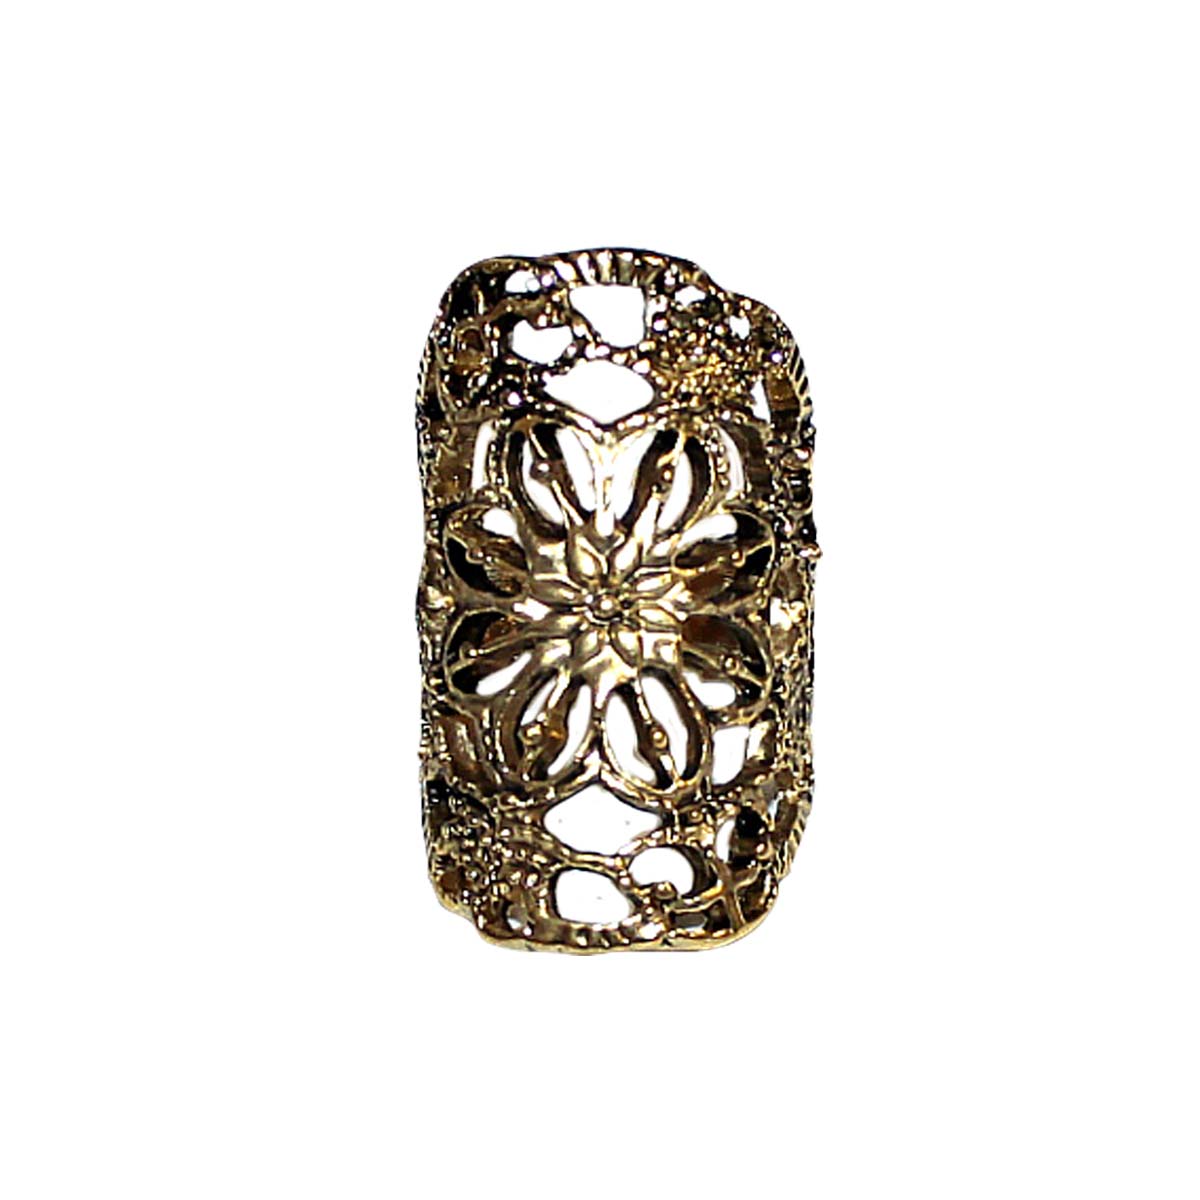 Кольцо № 1003 золото размер 17,5 мм (уп. 1 шт.)